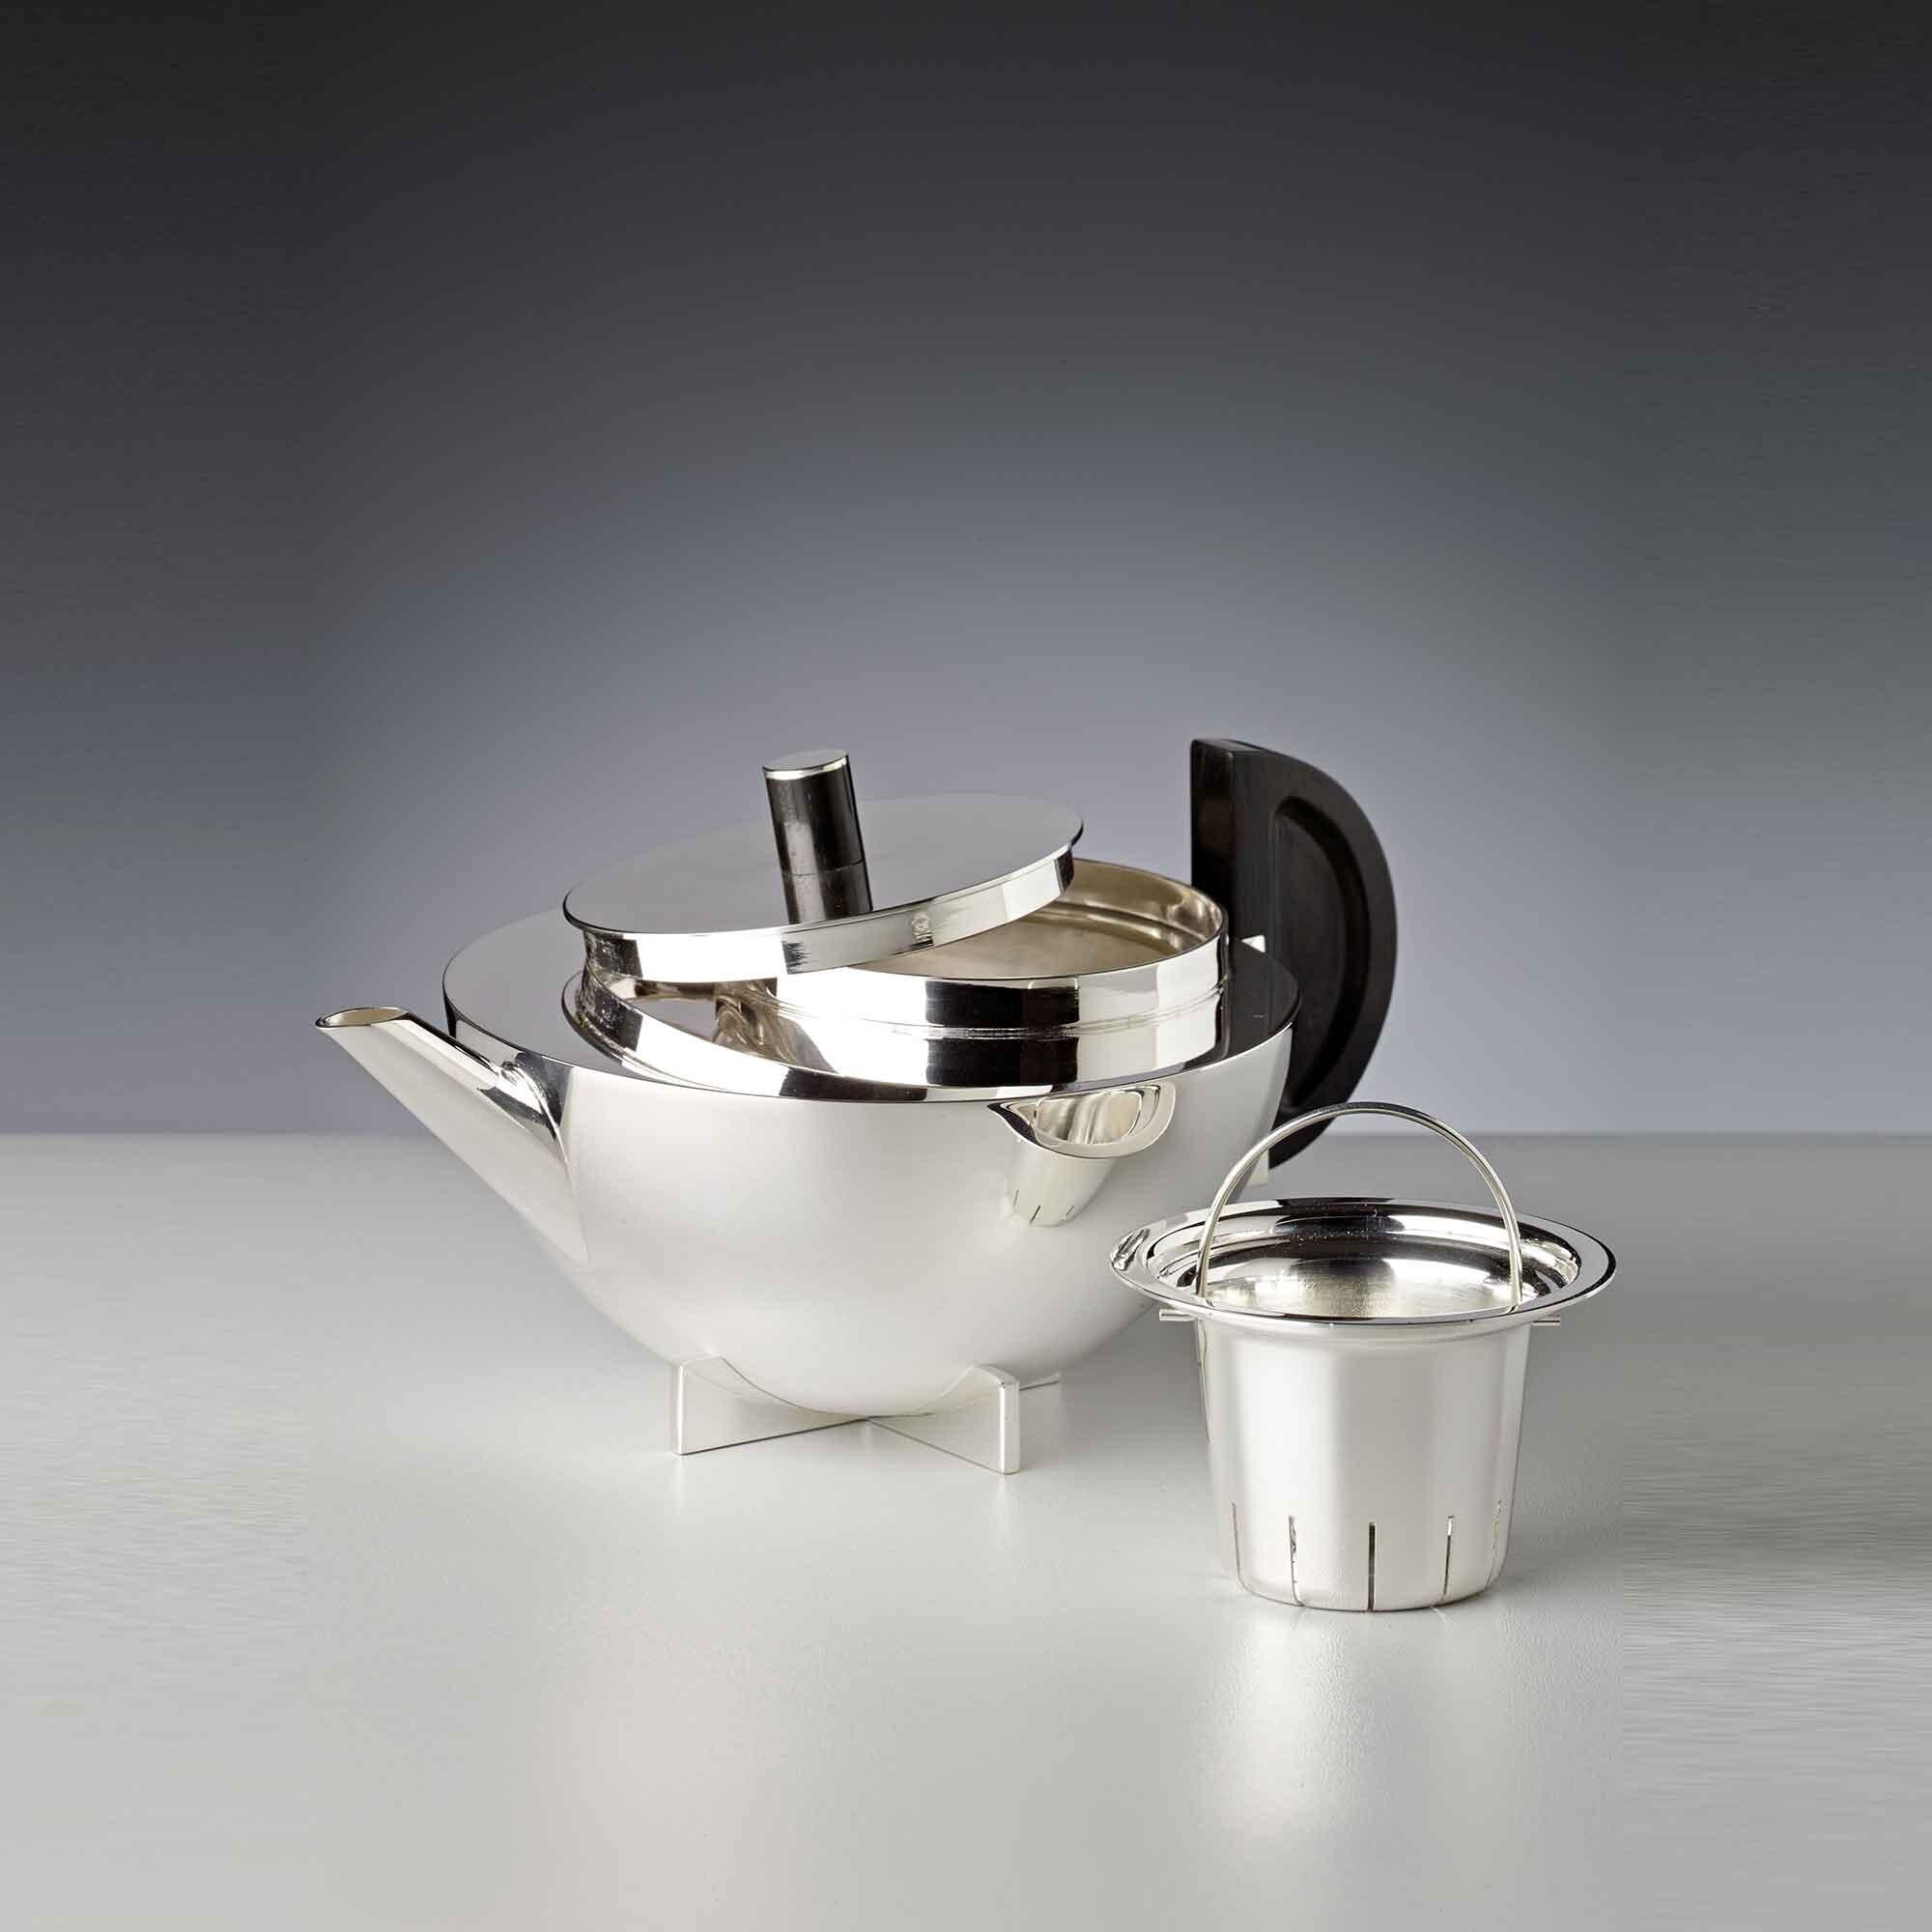 Modern design Scandinavian-style printing Gift for an architect. Decorative printing Bauhaus inspiration Design icon /'900 Teapot